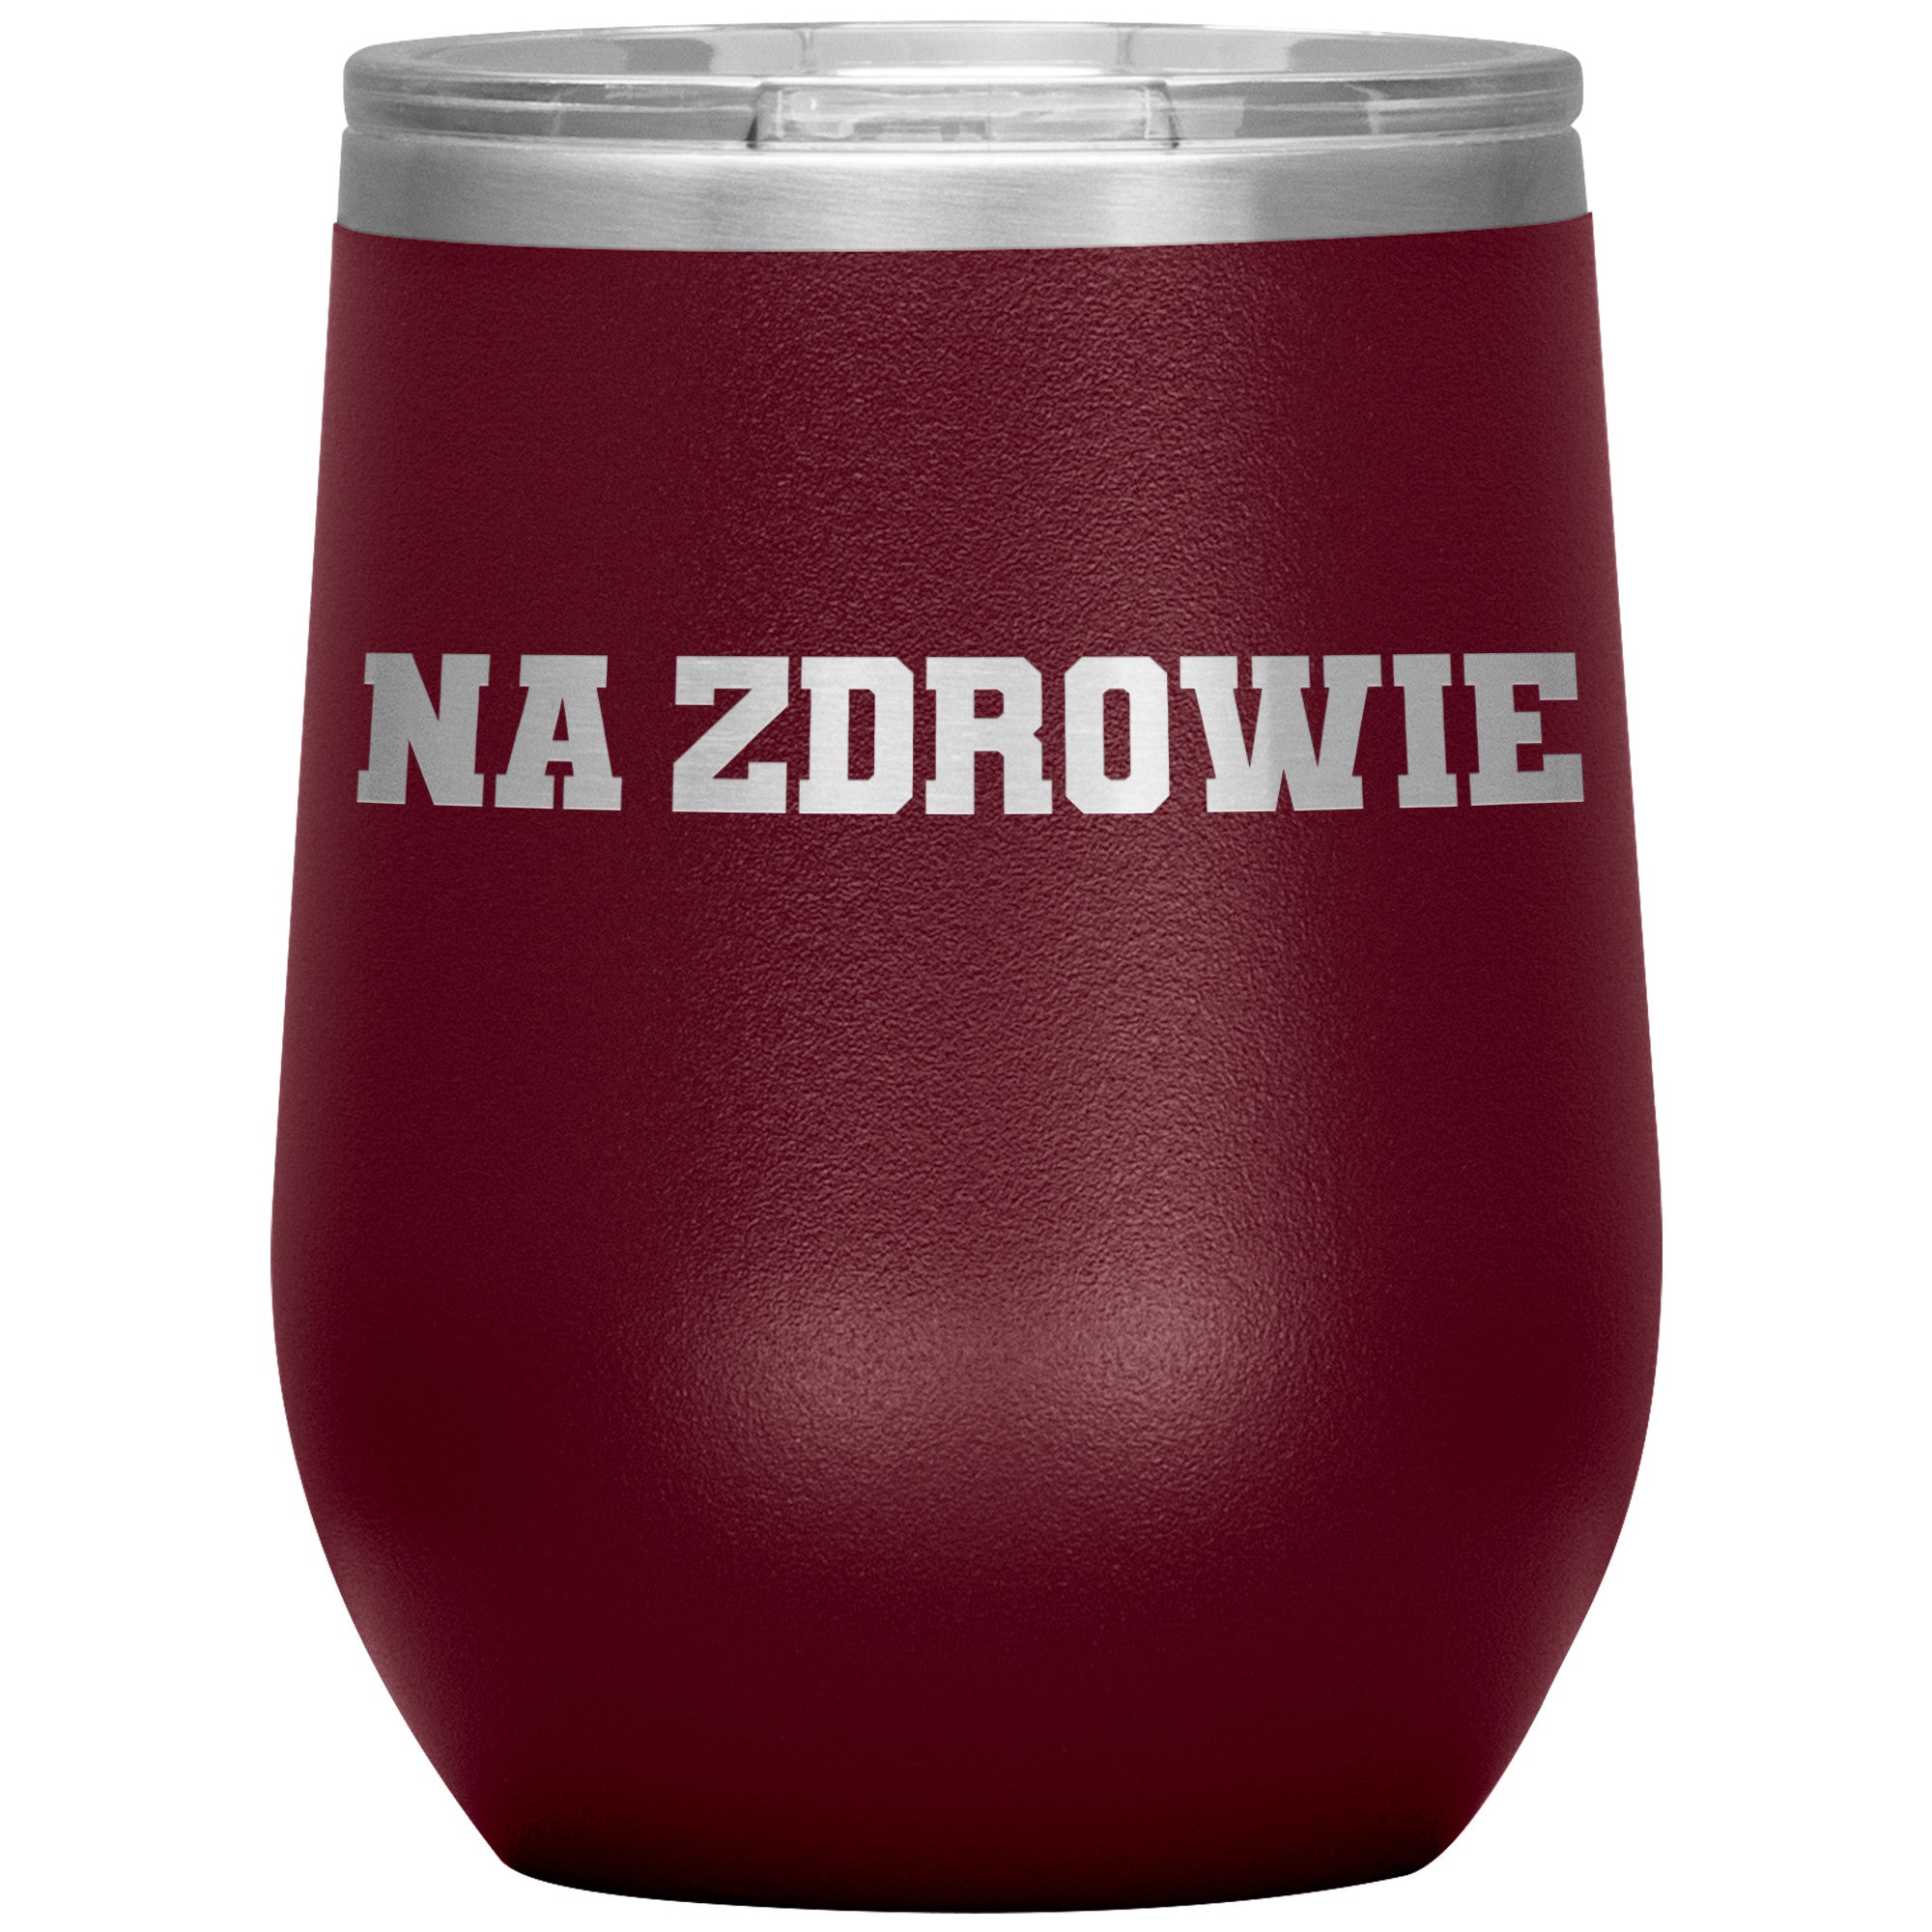 Na Zdrowie Insulated Wine Tumbler Tumblers teelaunch Maroon  